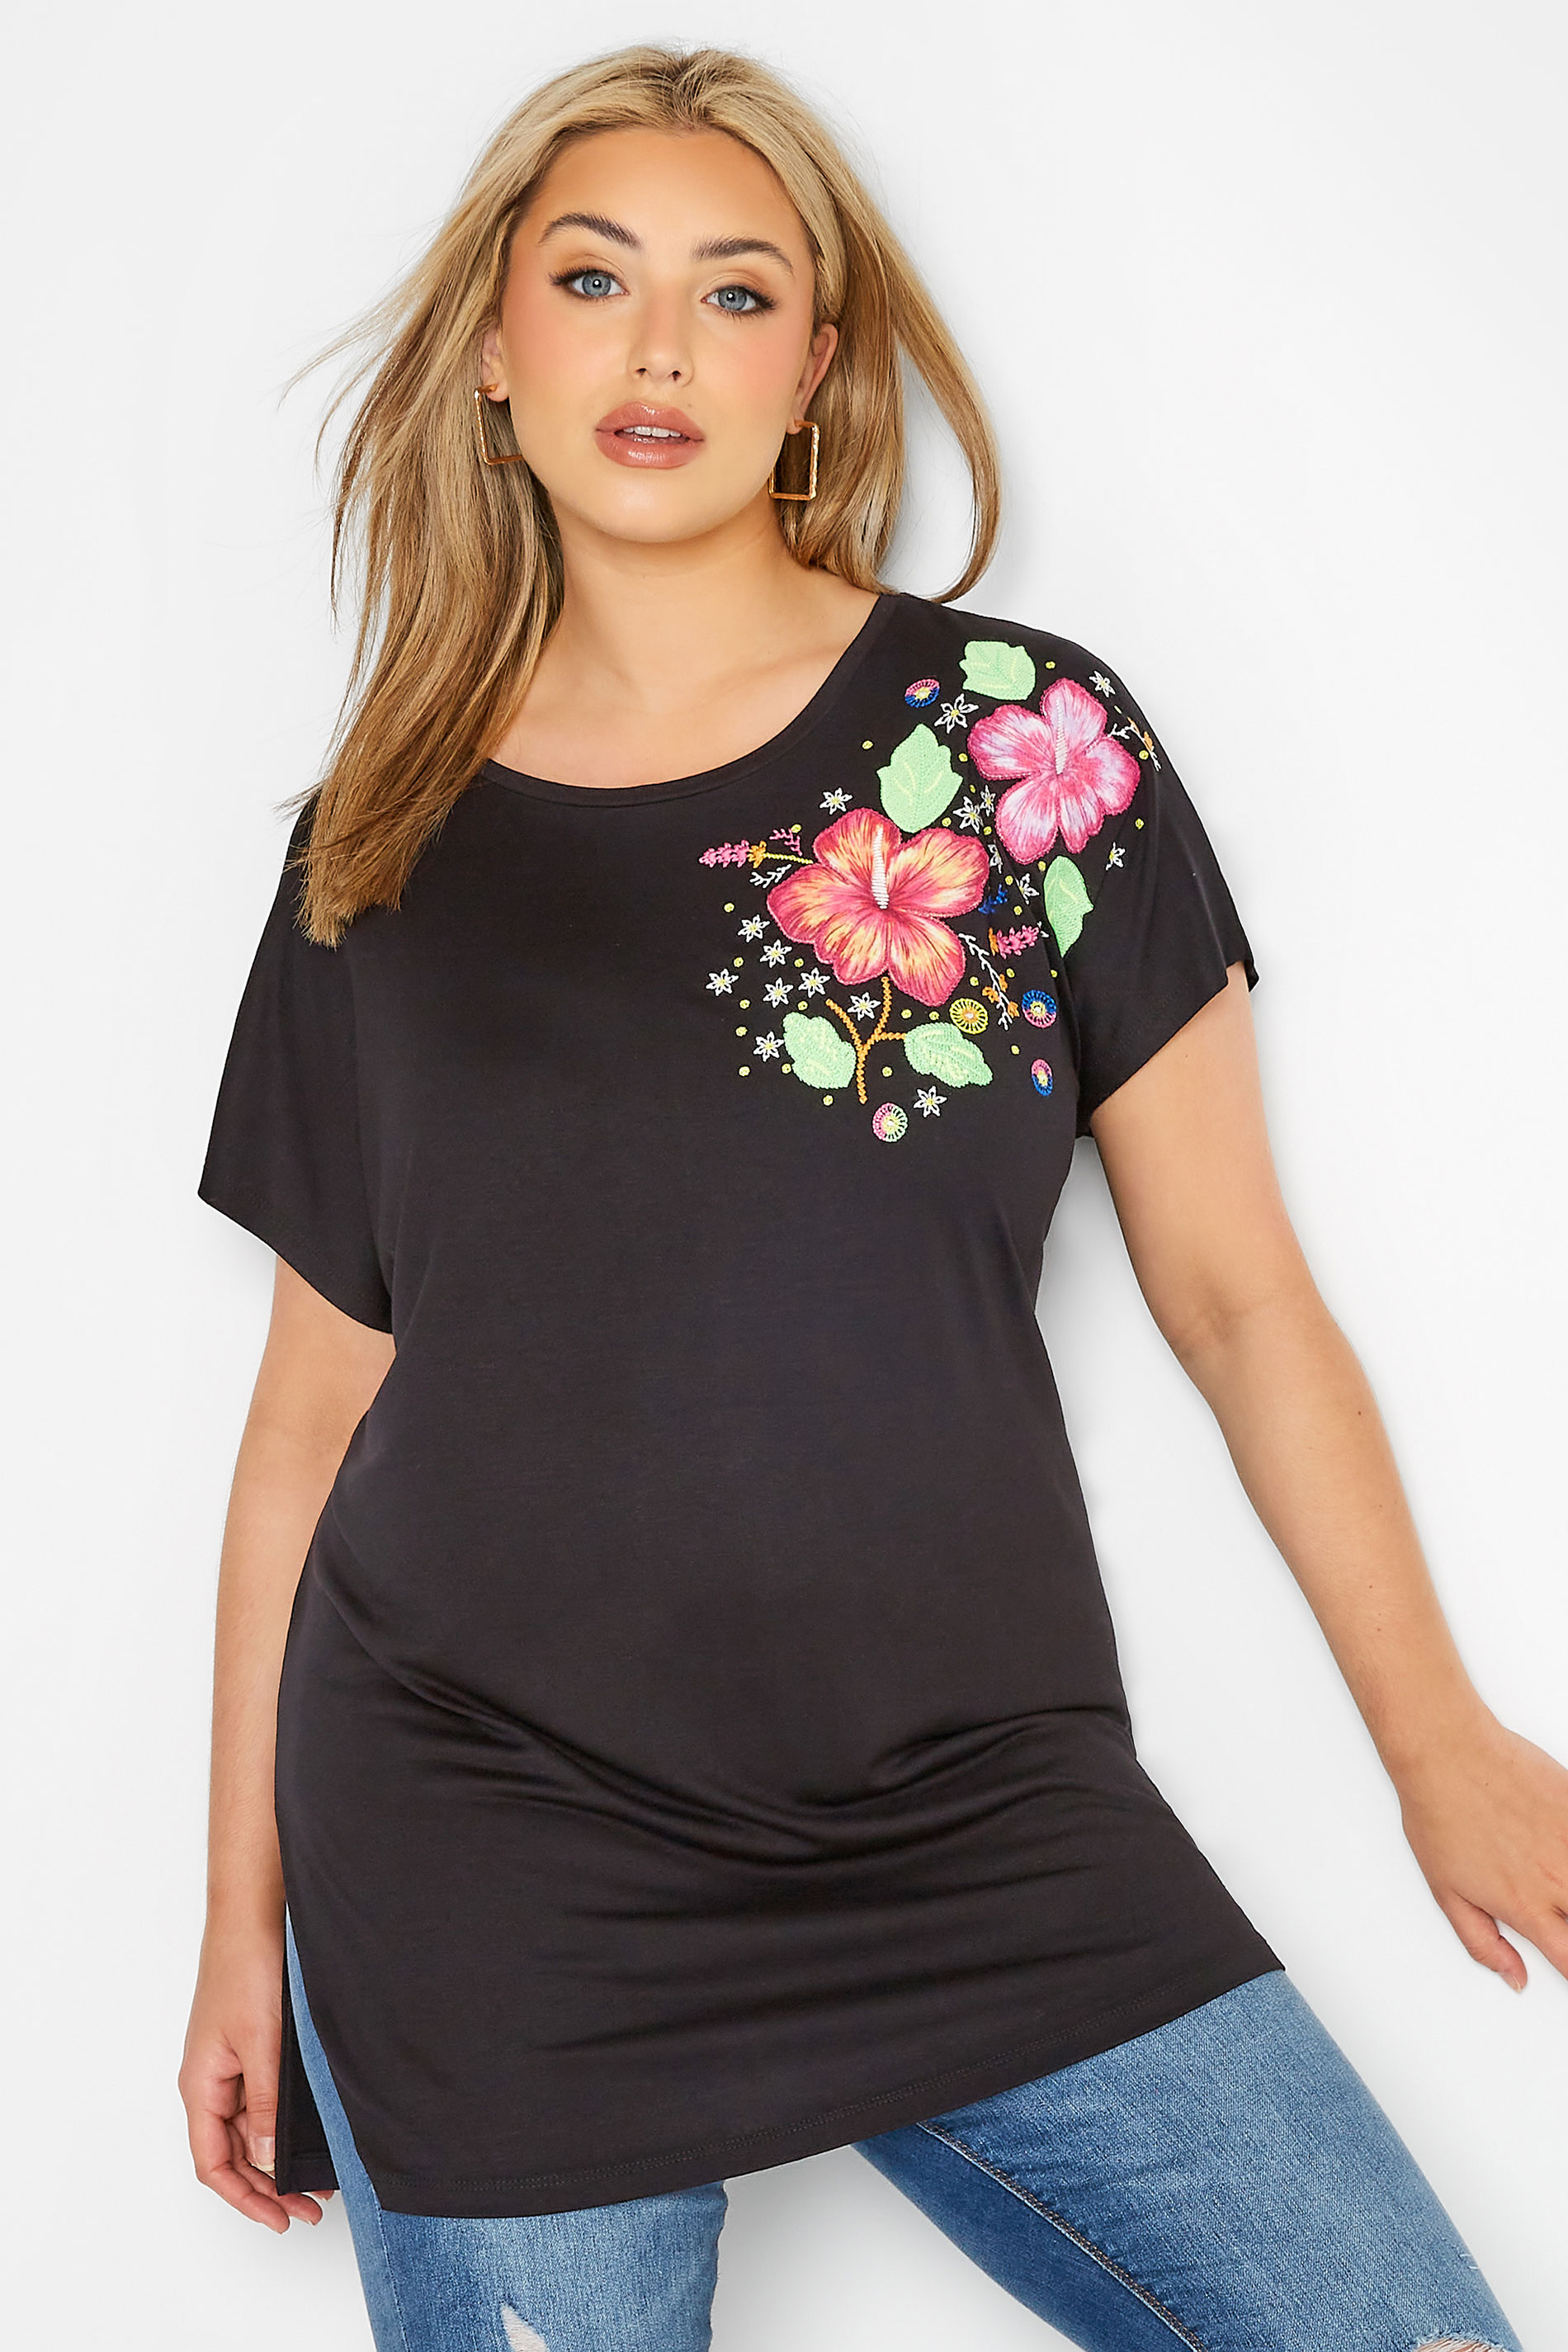 Grande taille  Tops Grande taille  T-Shirts | T-Shirt Noir Manches Courtes en Floral - IU44671